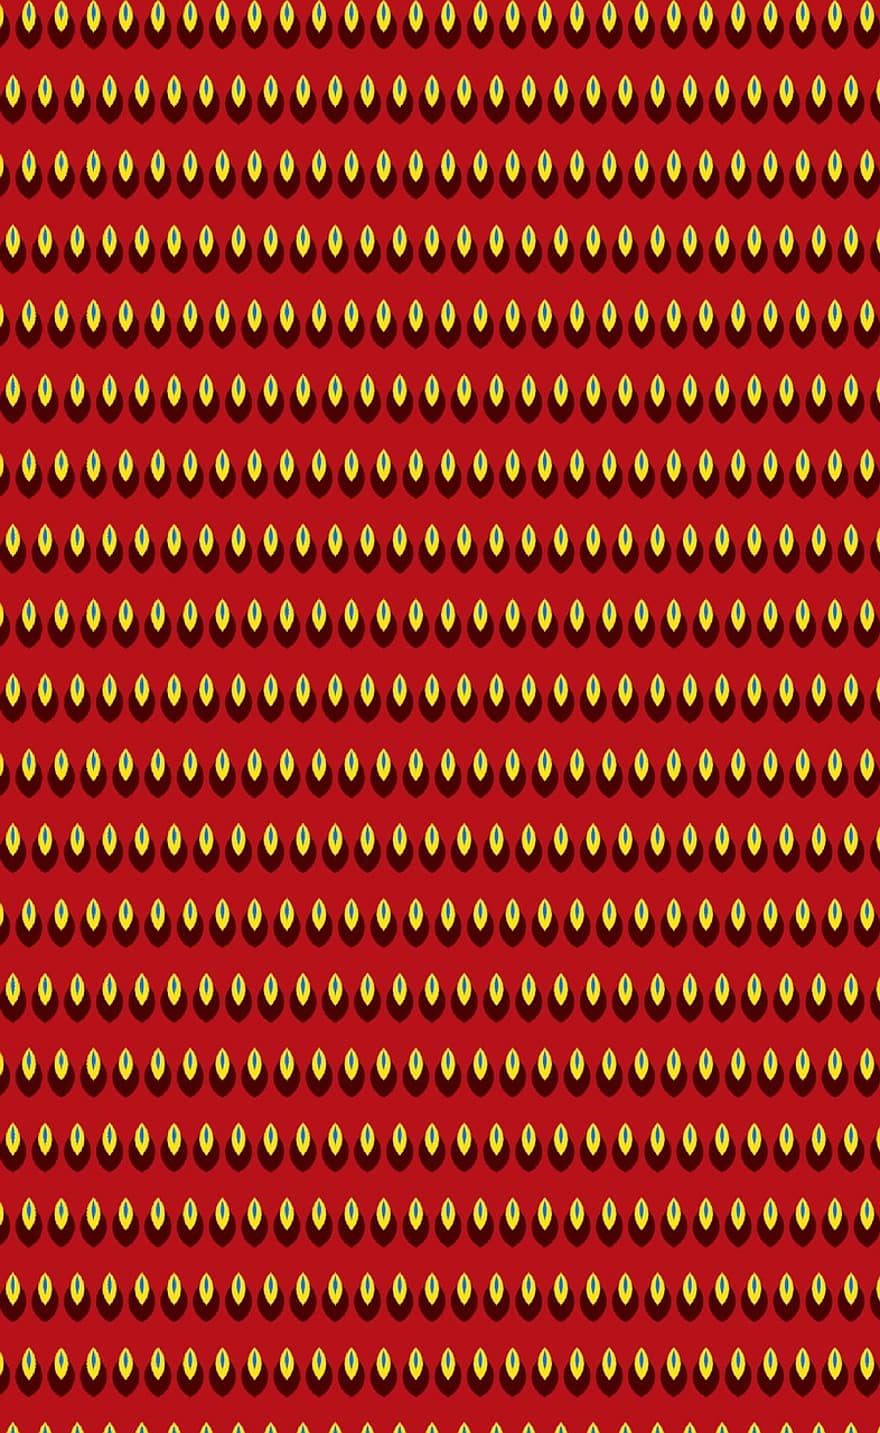 mønster, baggrund, design, struktur, farver, rød baggrund, rød tekstur, Rødt design, rødt mønster